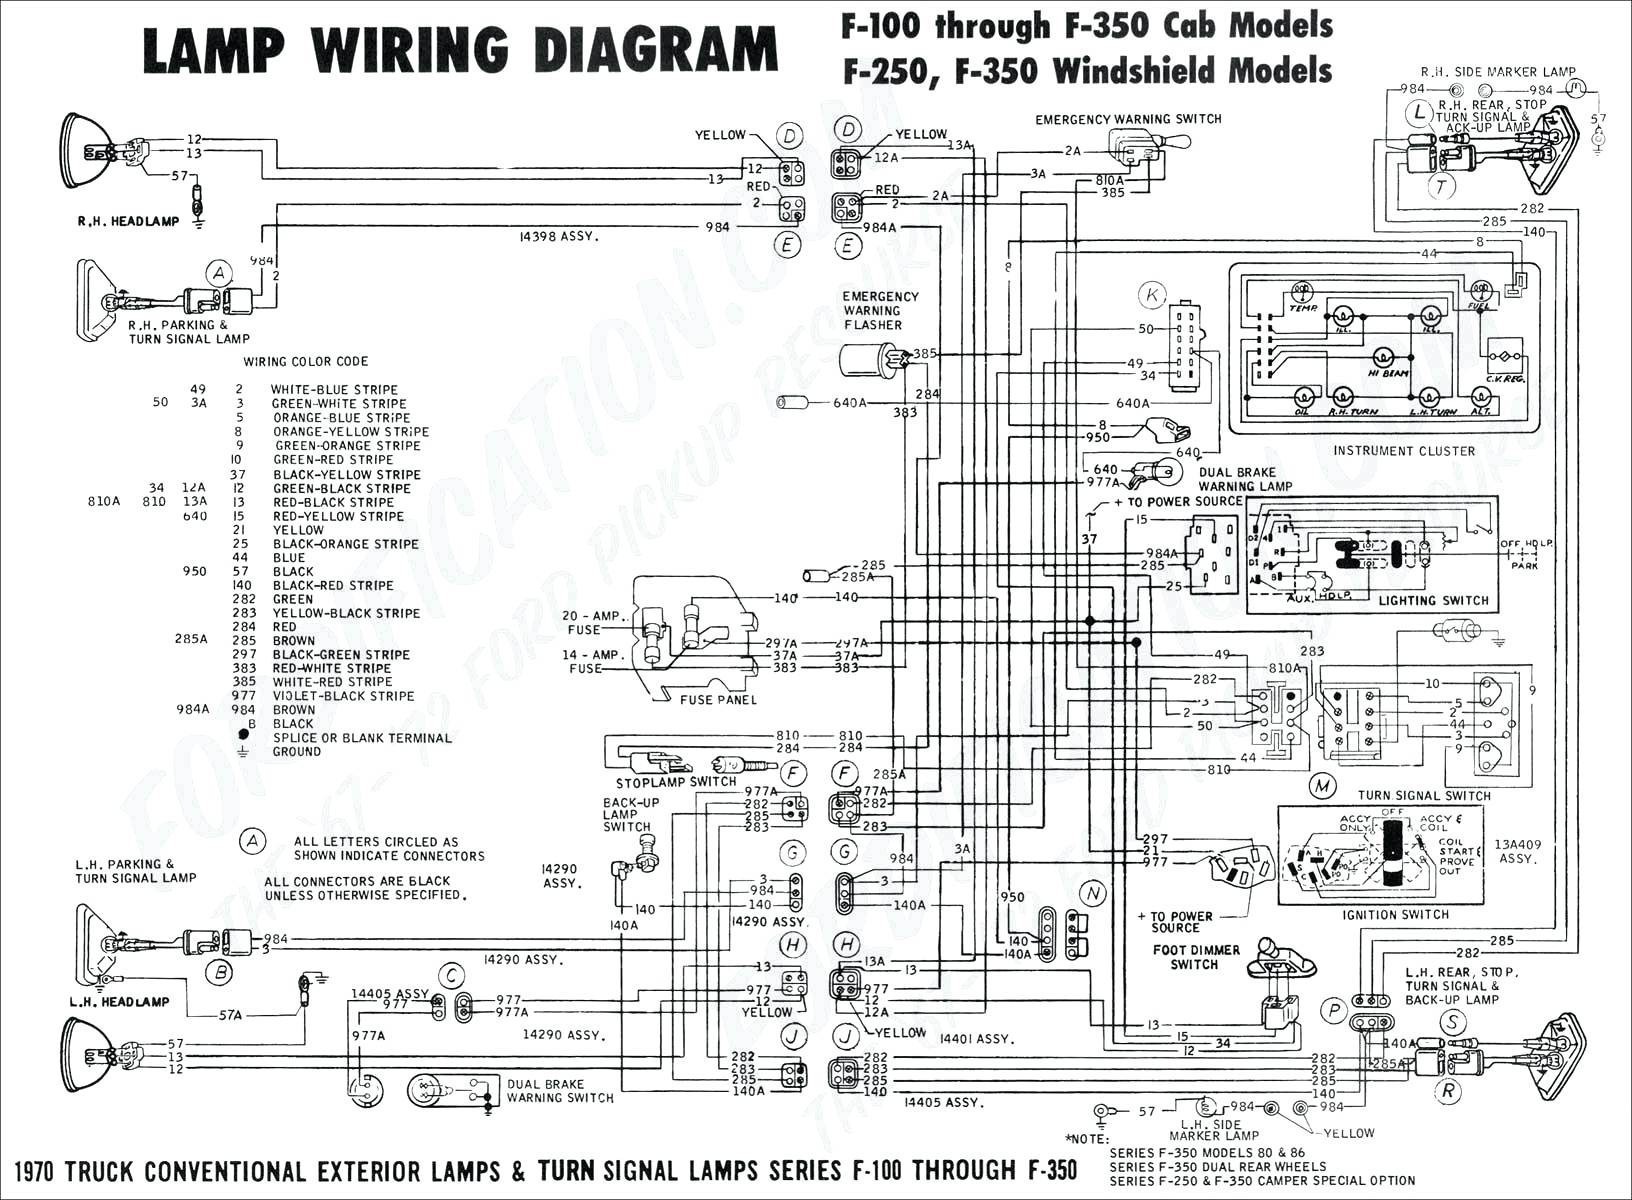 Shore Power Wiring Diagram Best Shore Power Wiring Diagram 2018 Coachmen Wiring Diagrams Lovely Rv